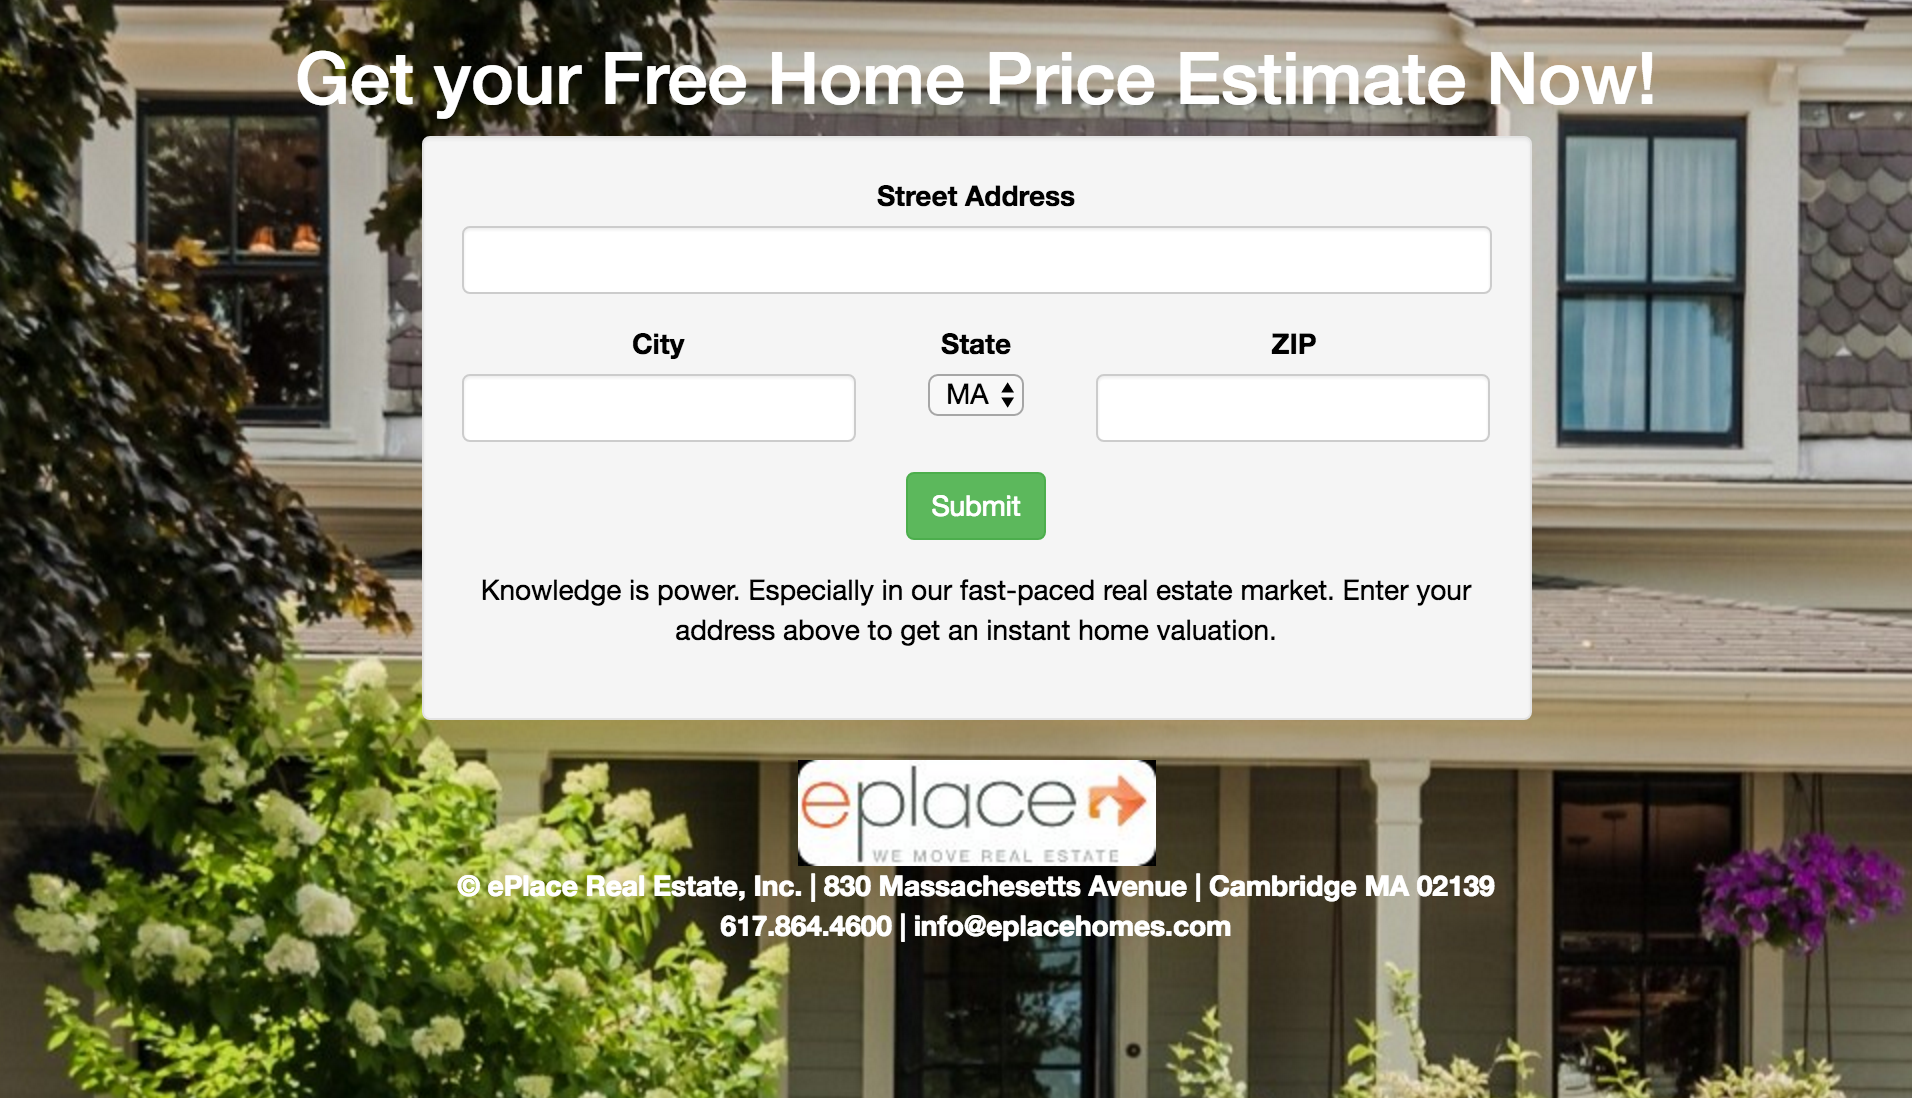 Rails Web App: Home Price Estimator